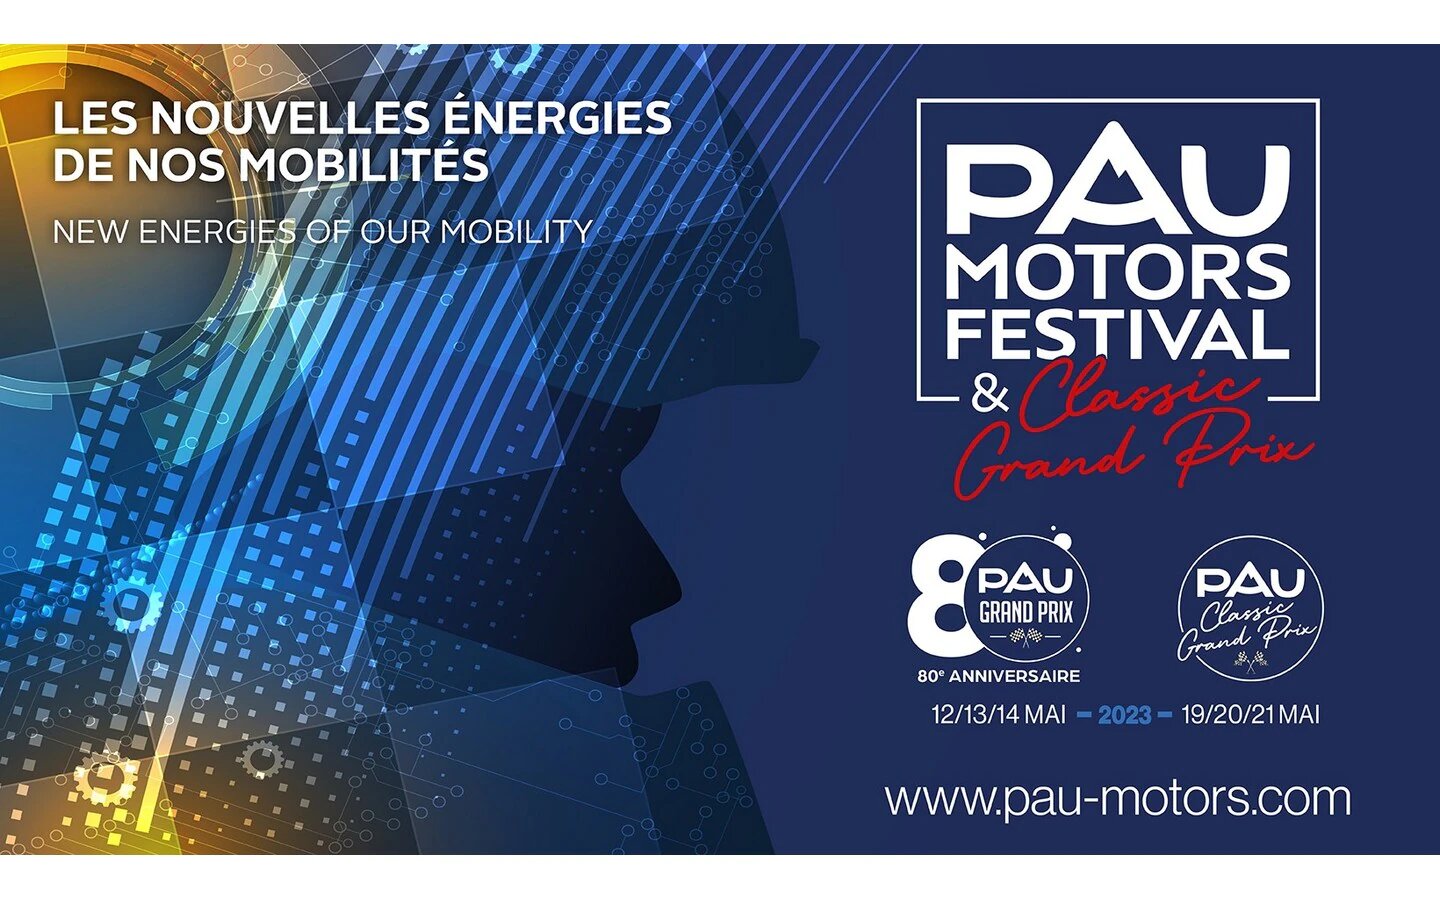 pau motors festival classic grand prix 2023 05 19